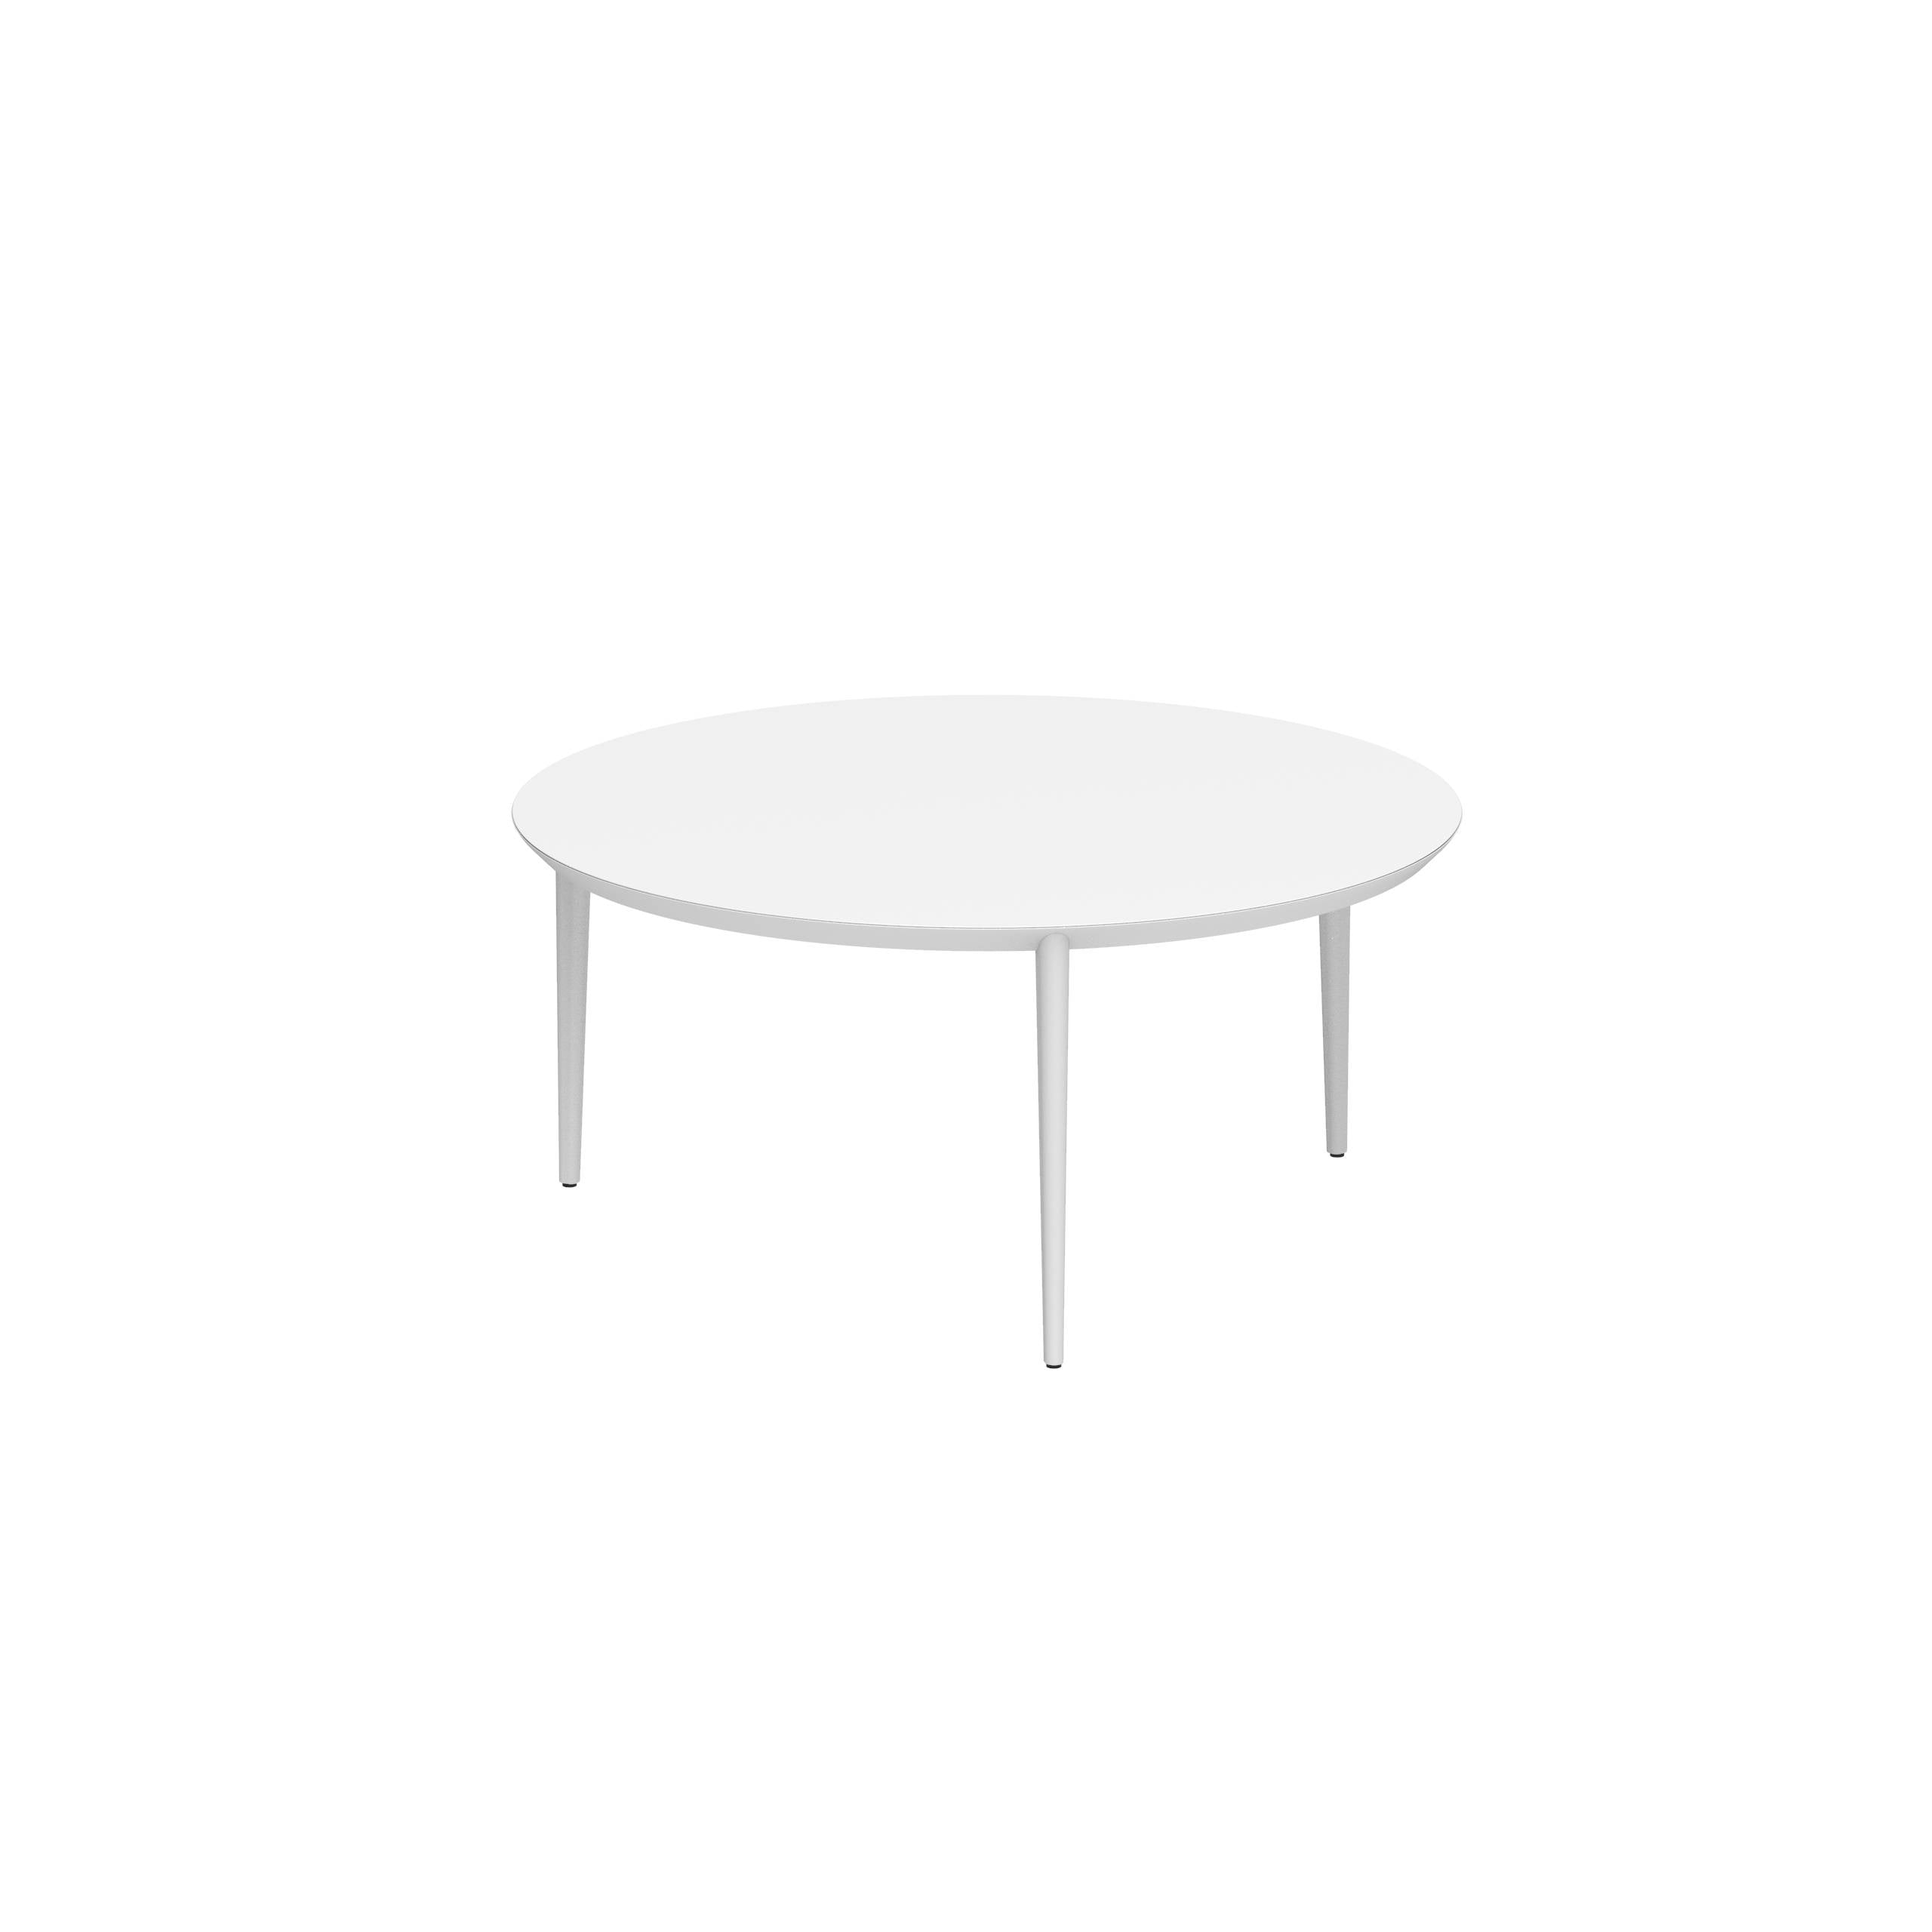 U-Nite Table Round Ø 160cm Alu Legs White - Table Top Ceramic White